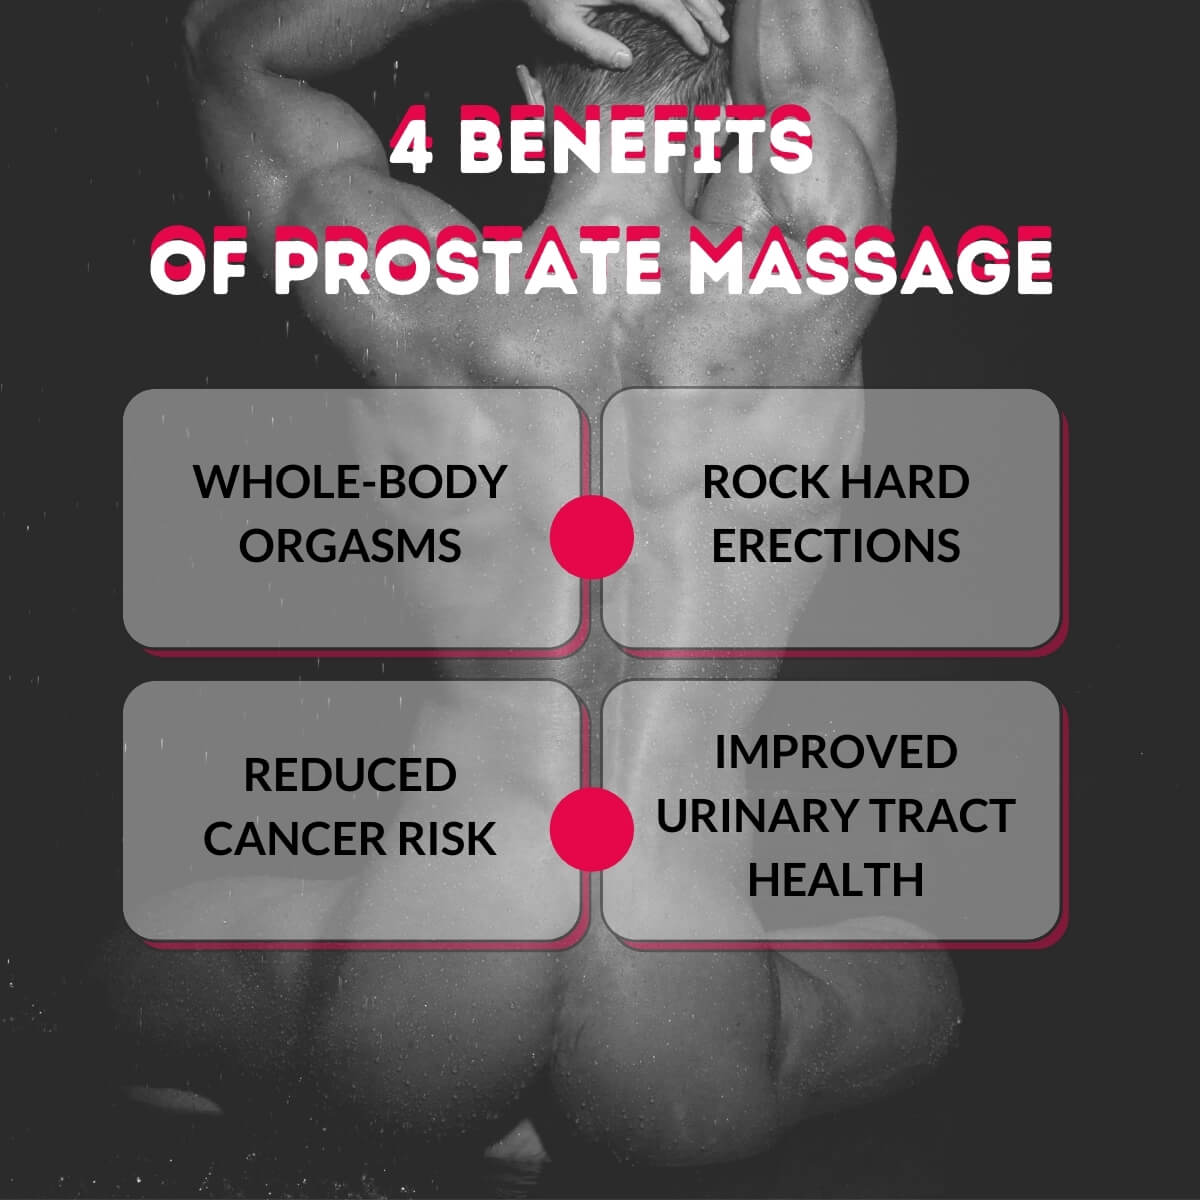 4 Benefits of P-Spot Massage prostate milking